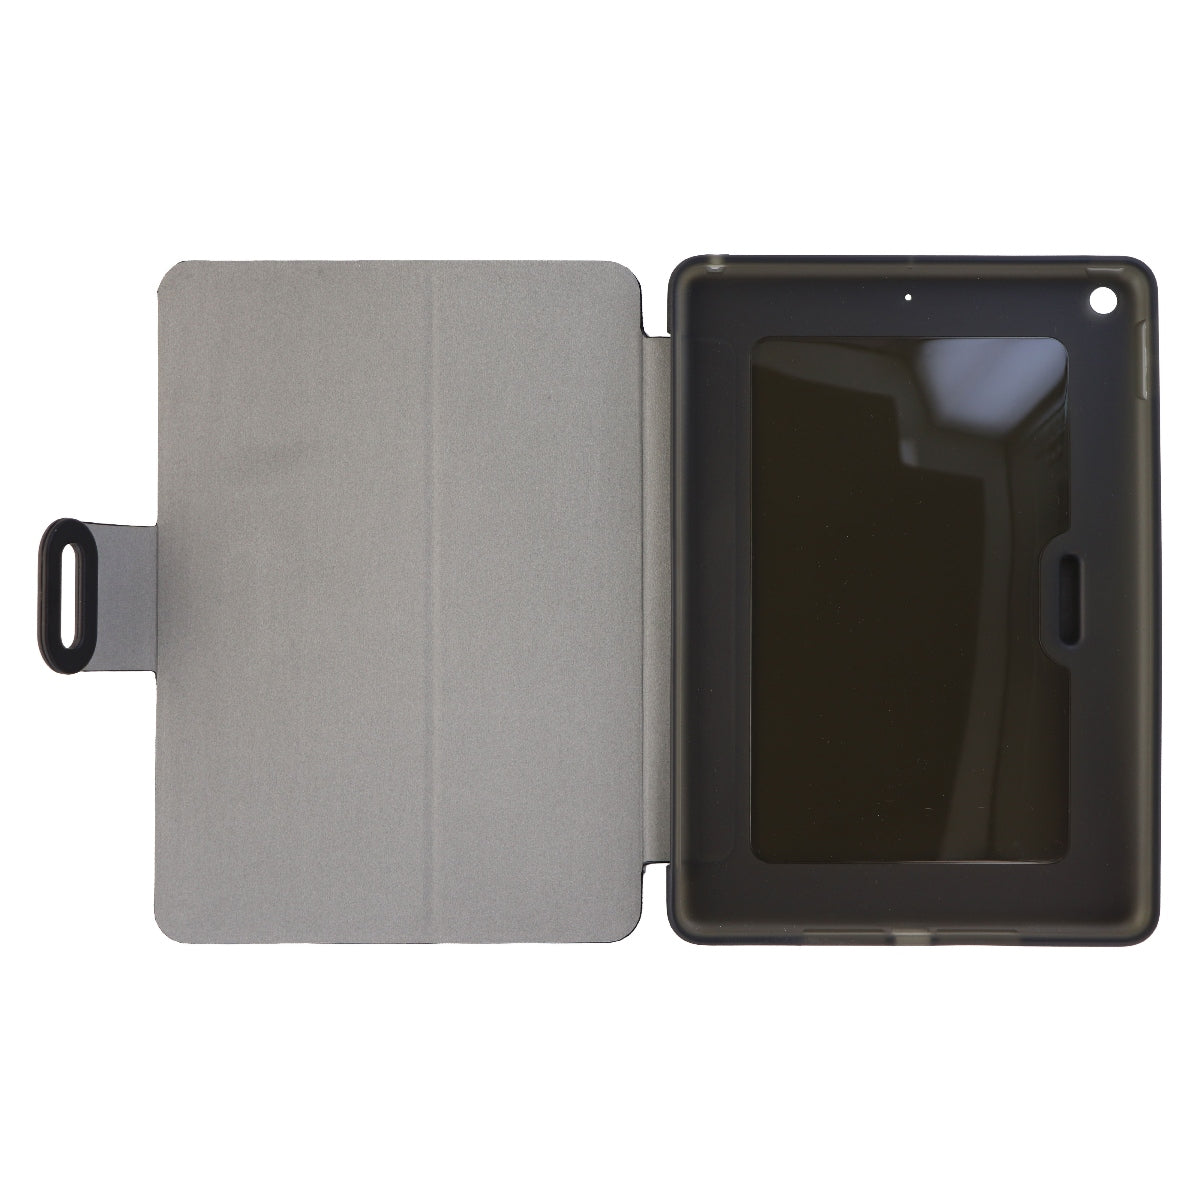 Incipio Clarion Series Folio Gel Case for Apple iPad 9.7-inch (2017) - Black iPad/Tablet Accessories - Cases, Covers, Keyboard Folios Incipio    - Simple Cell Bulk Wholesale Pricing - USA Seller